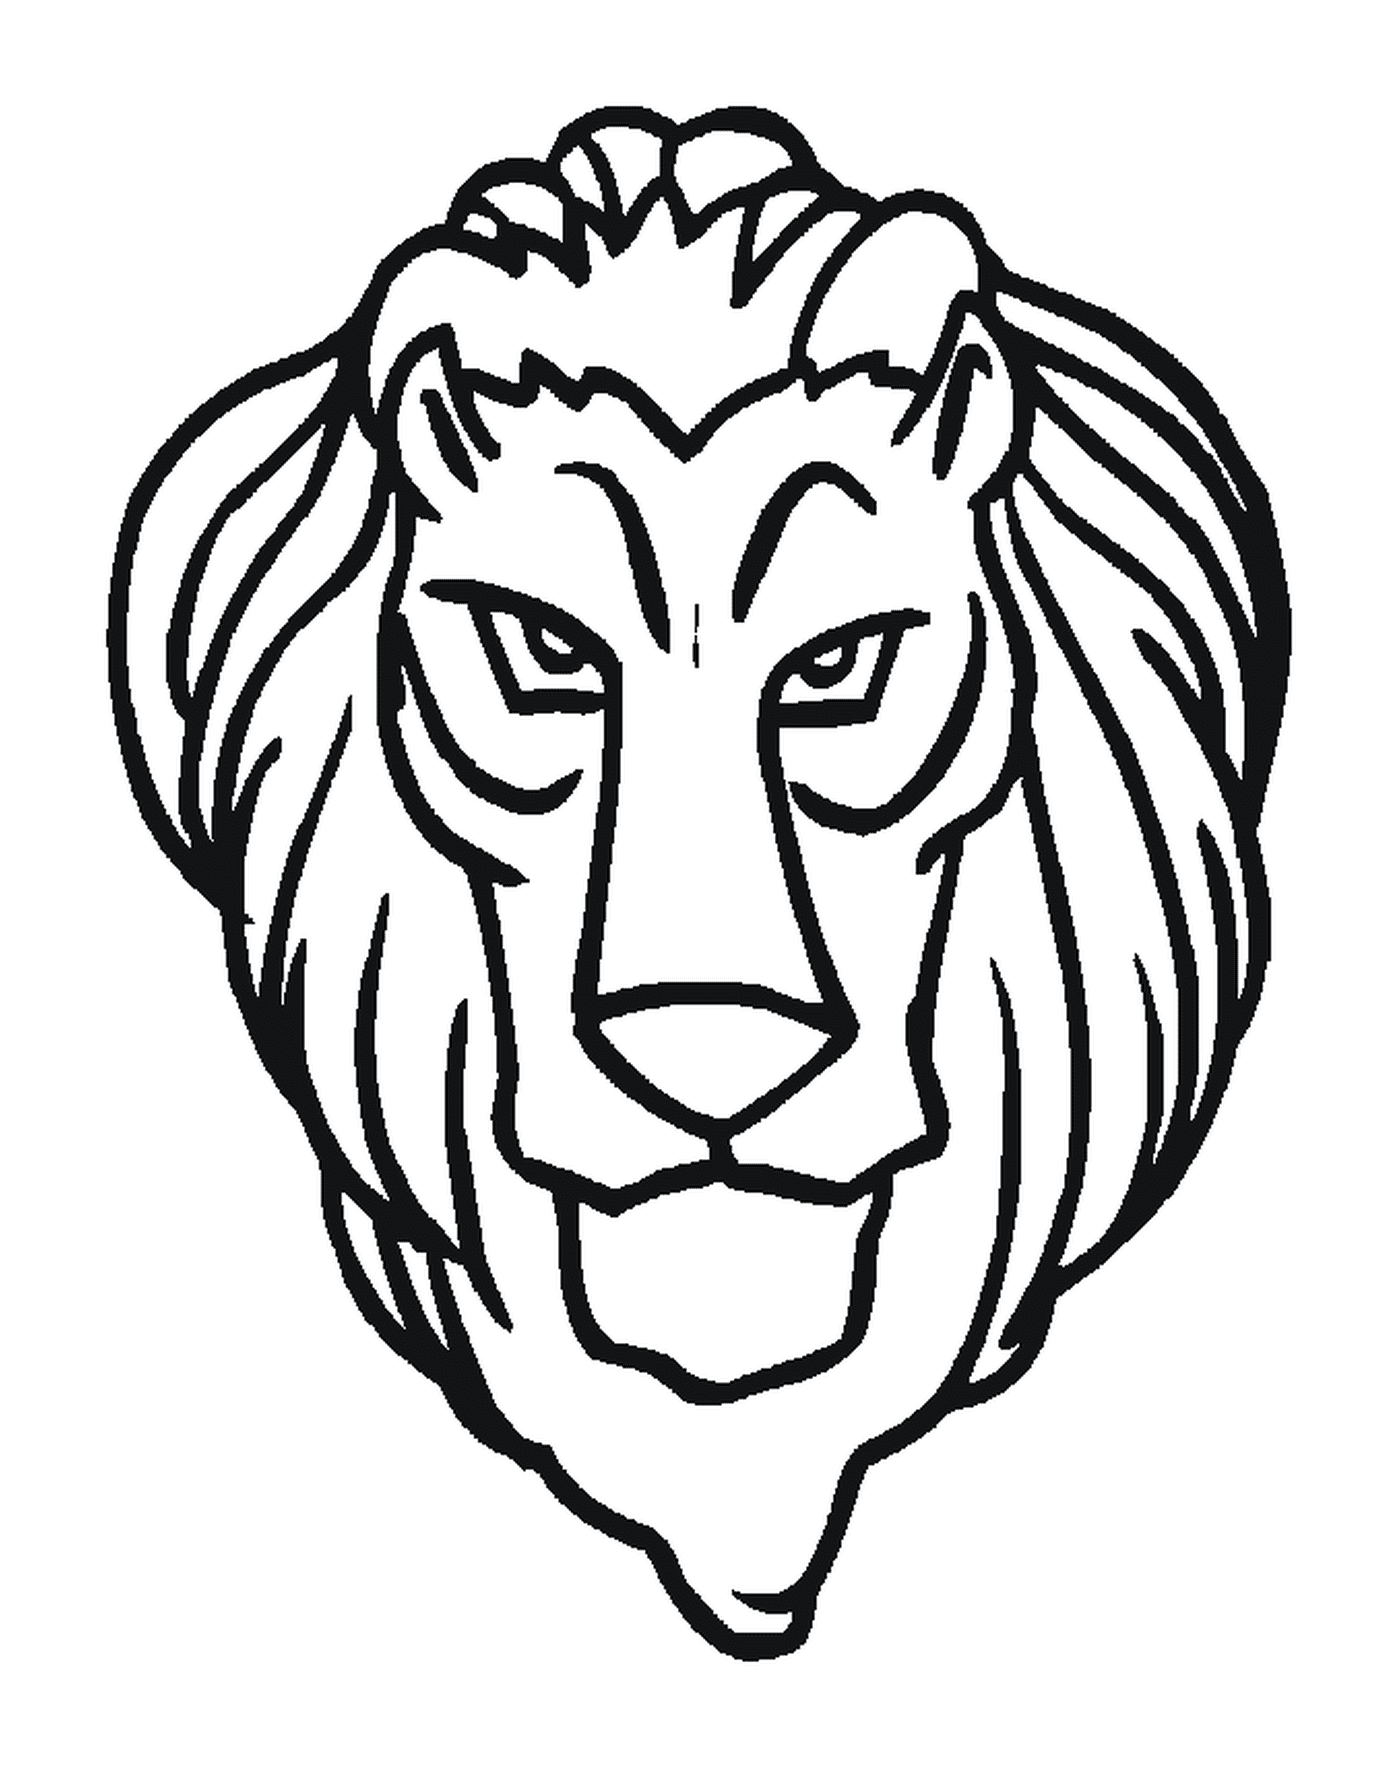  A majestic lion's head 